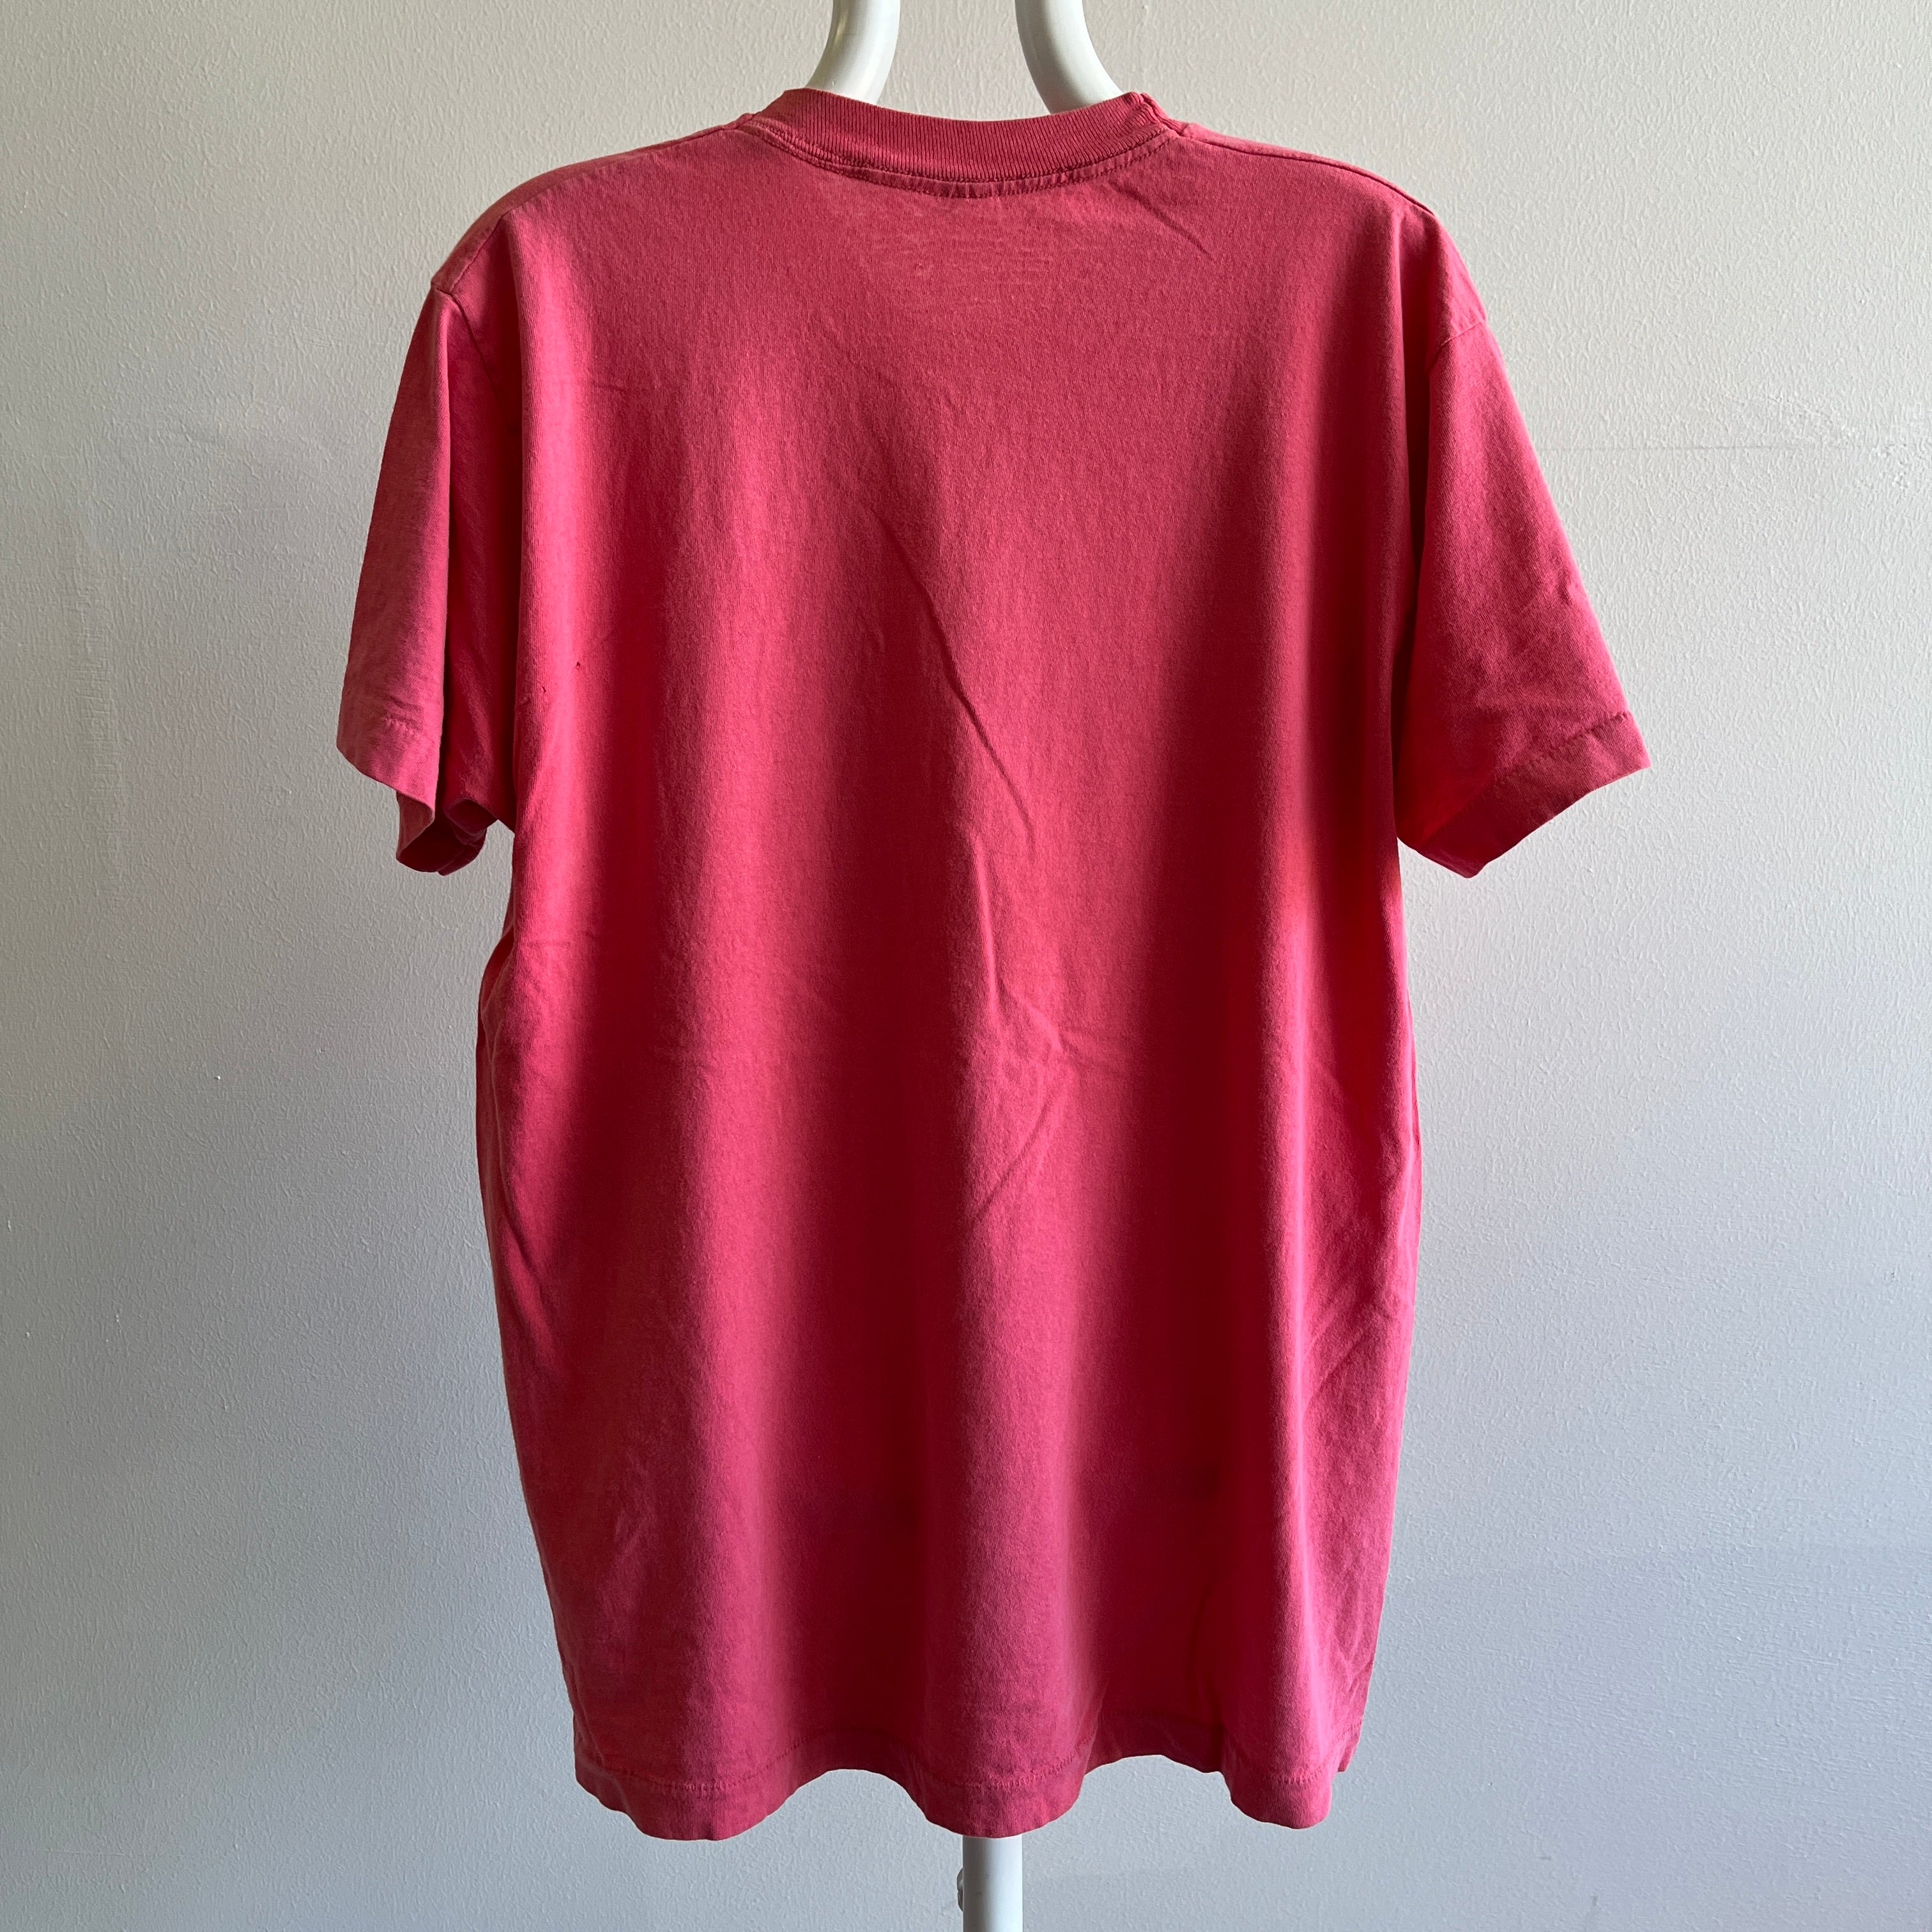 1980s Salmon Pink Pocket T-Shirt by FOTL